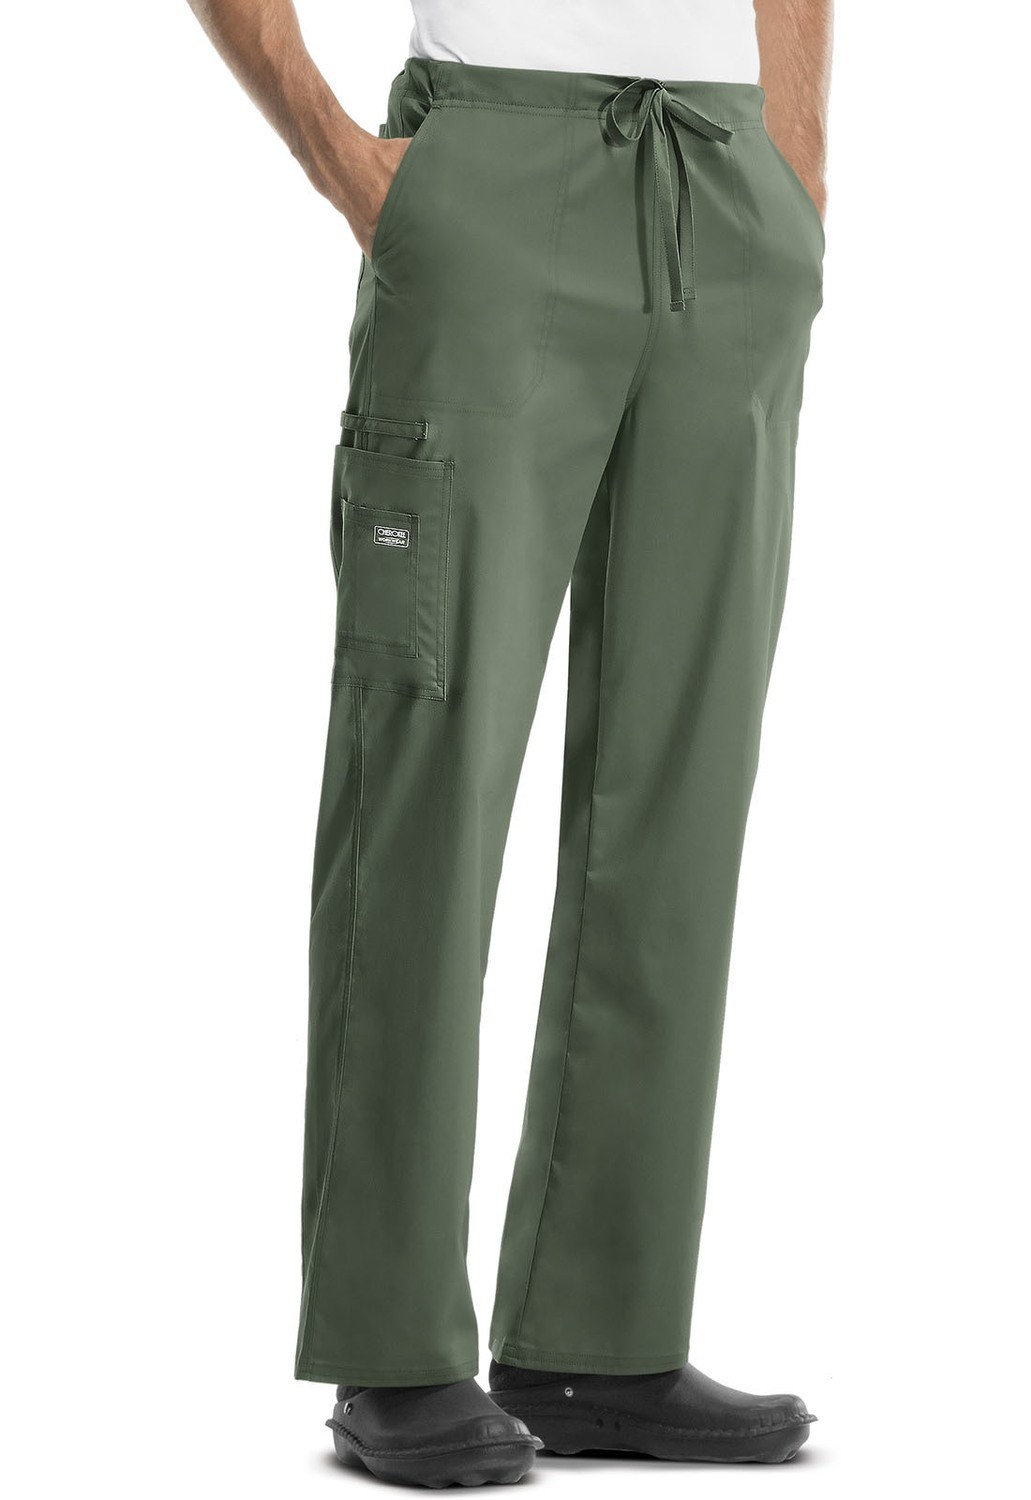 Pantalone Unisex CHEROKEE CORE STRETCH 4043 Colore Olive